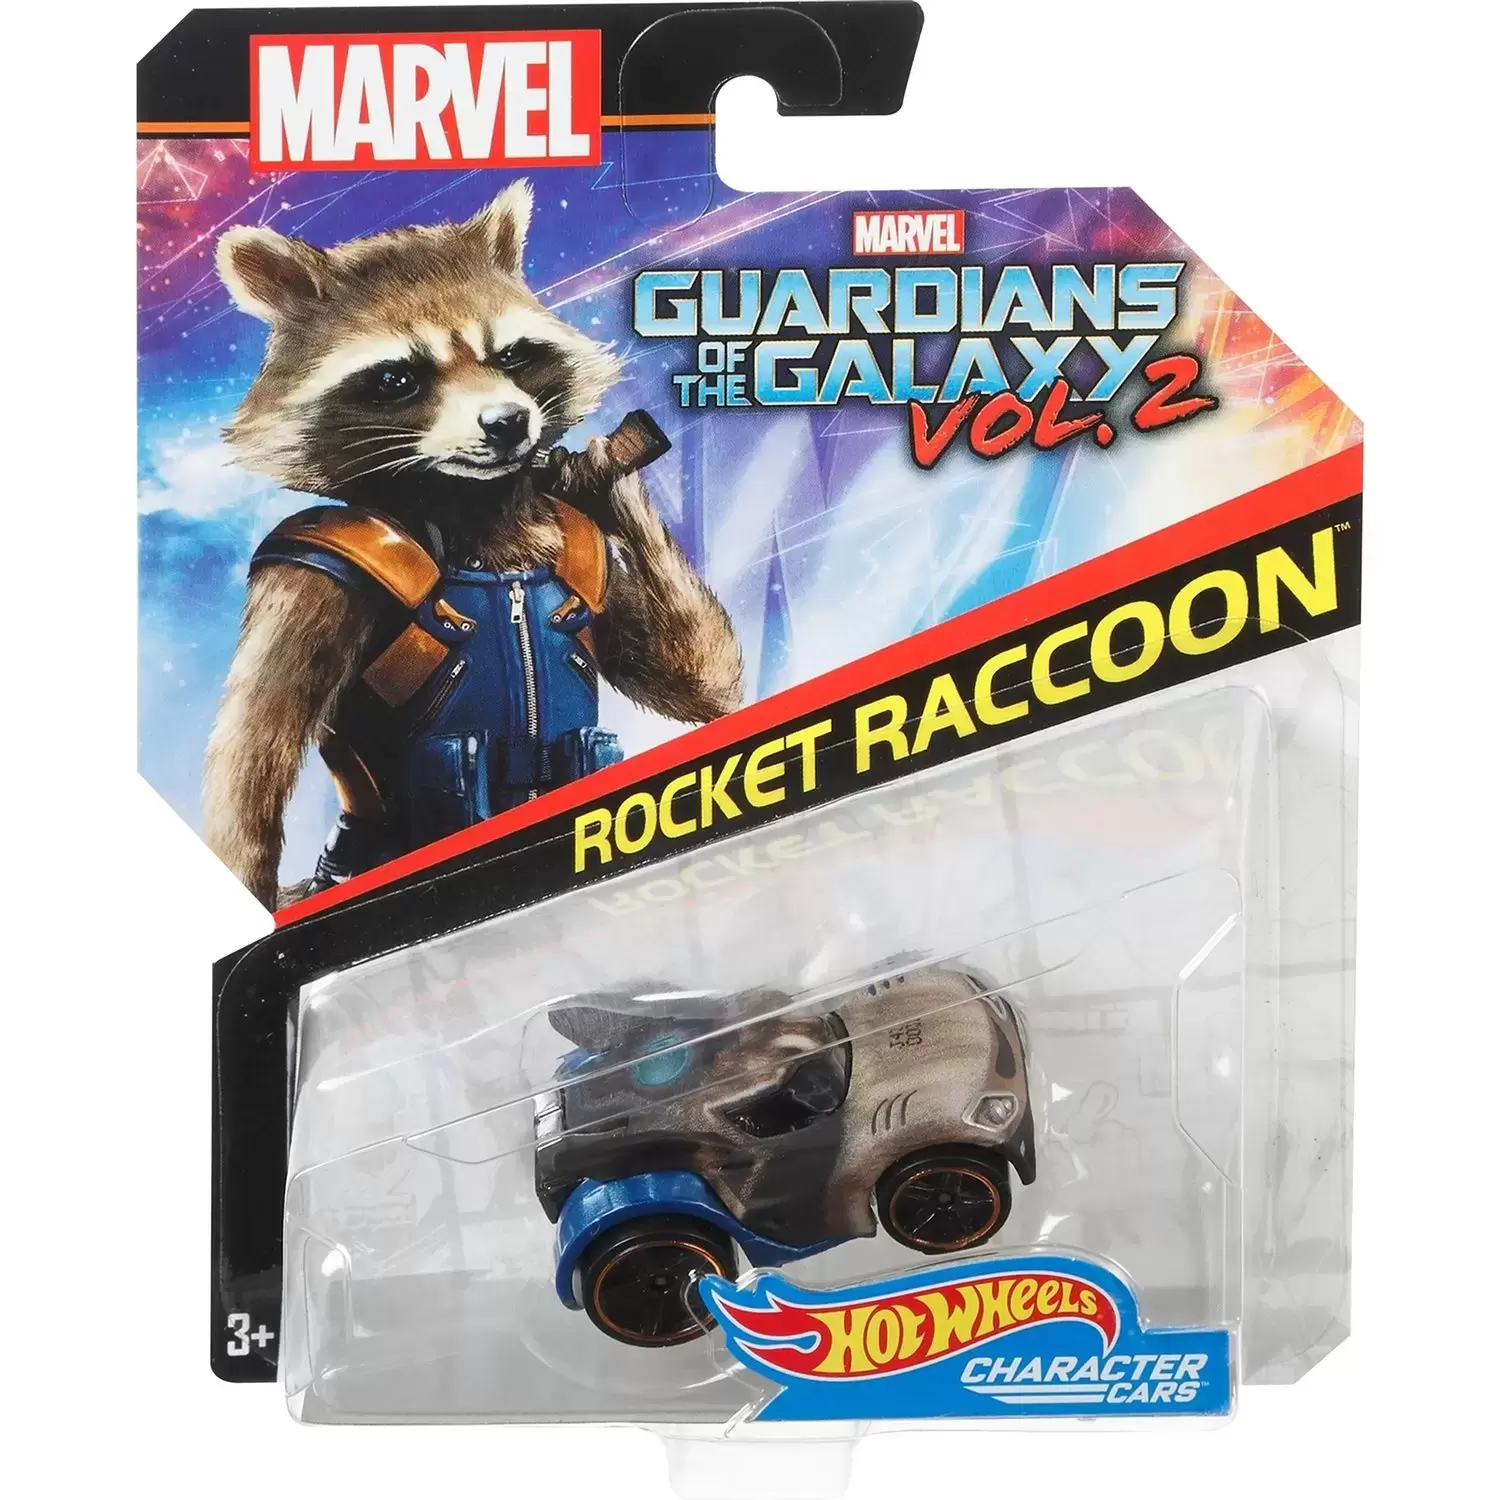 Marvel Character Cars - Guardians of the Galaxy Vol. 2 - Rocket Raccoon